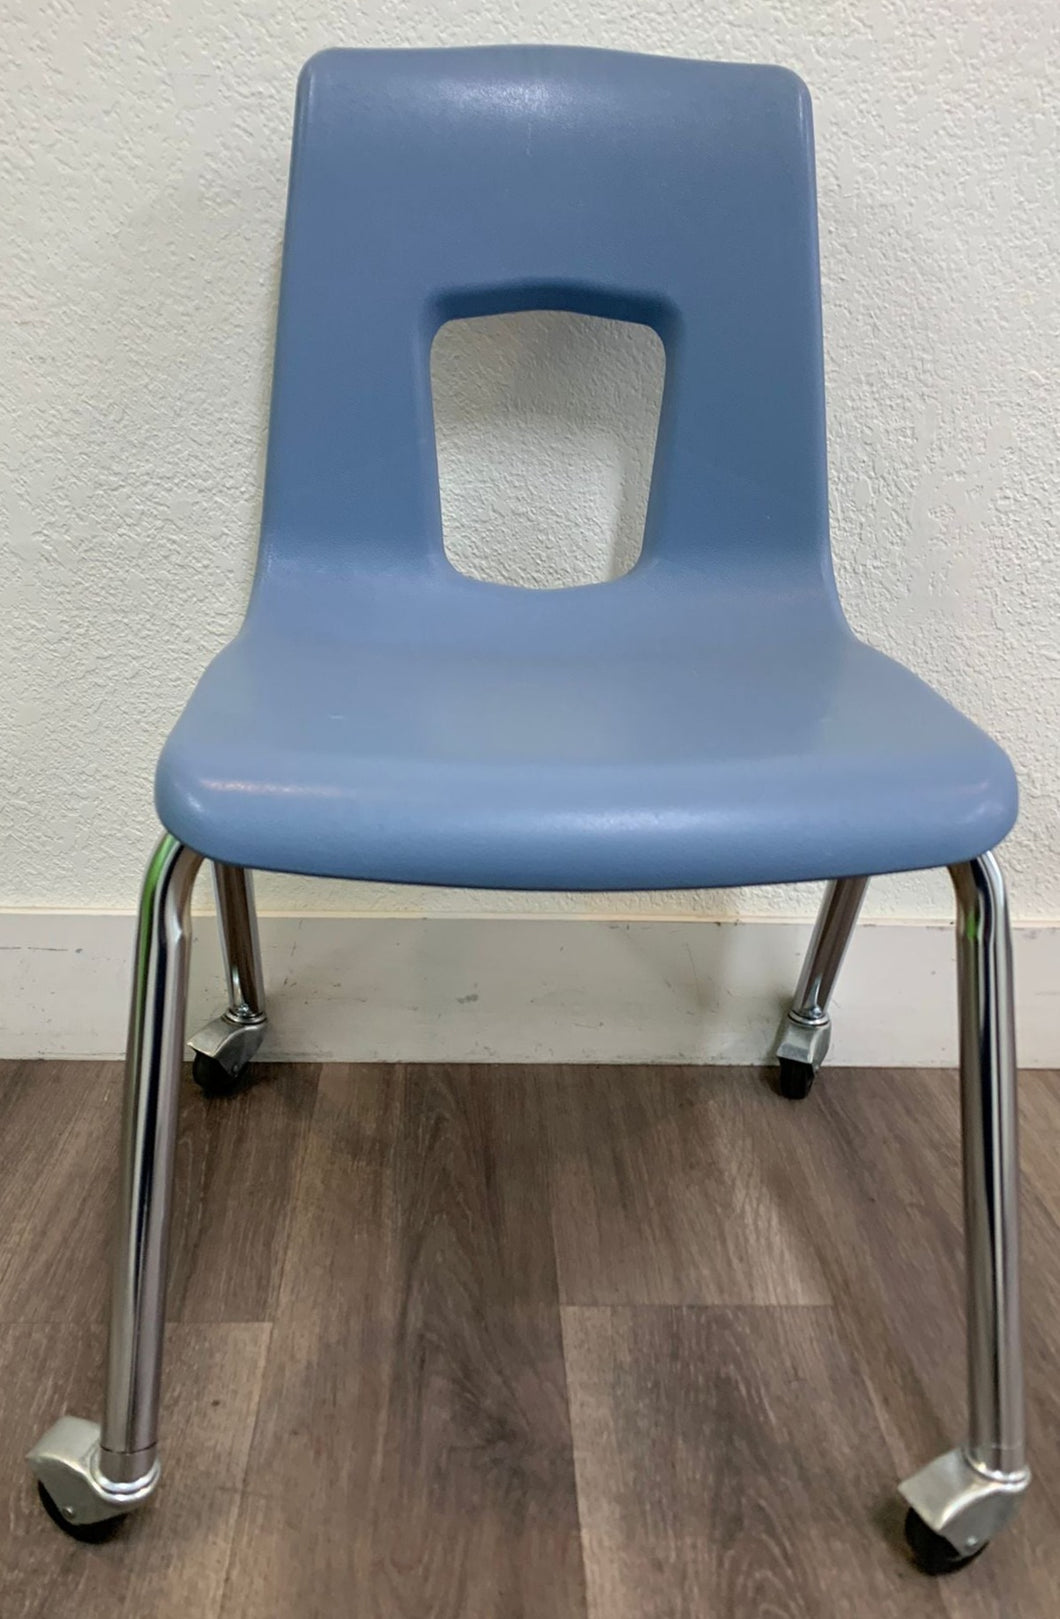 Teacher Chair -18in Artco Bell Uniflex Chair w/ Casters, Light Blue (RF)